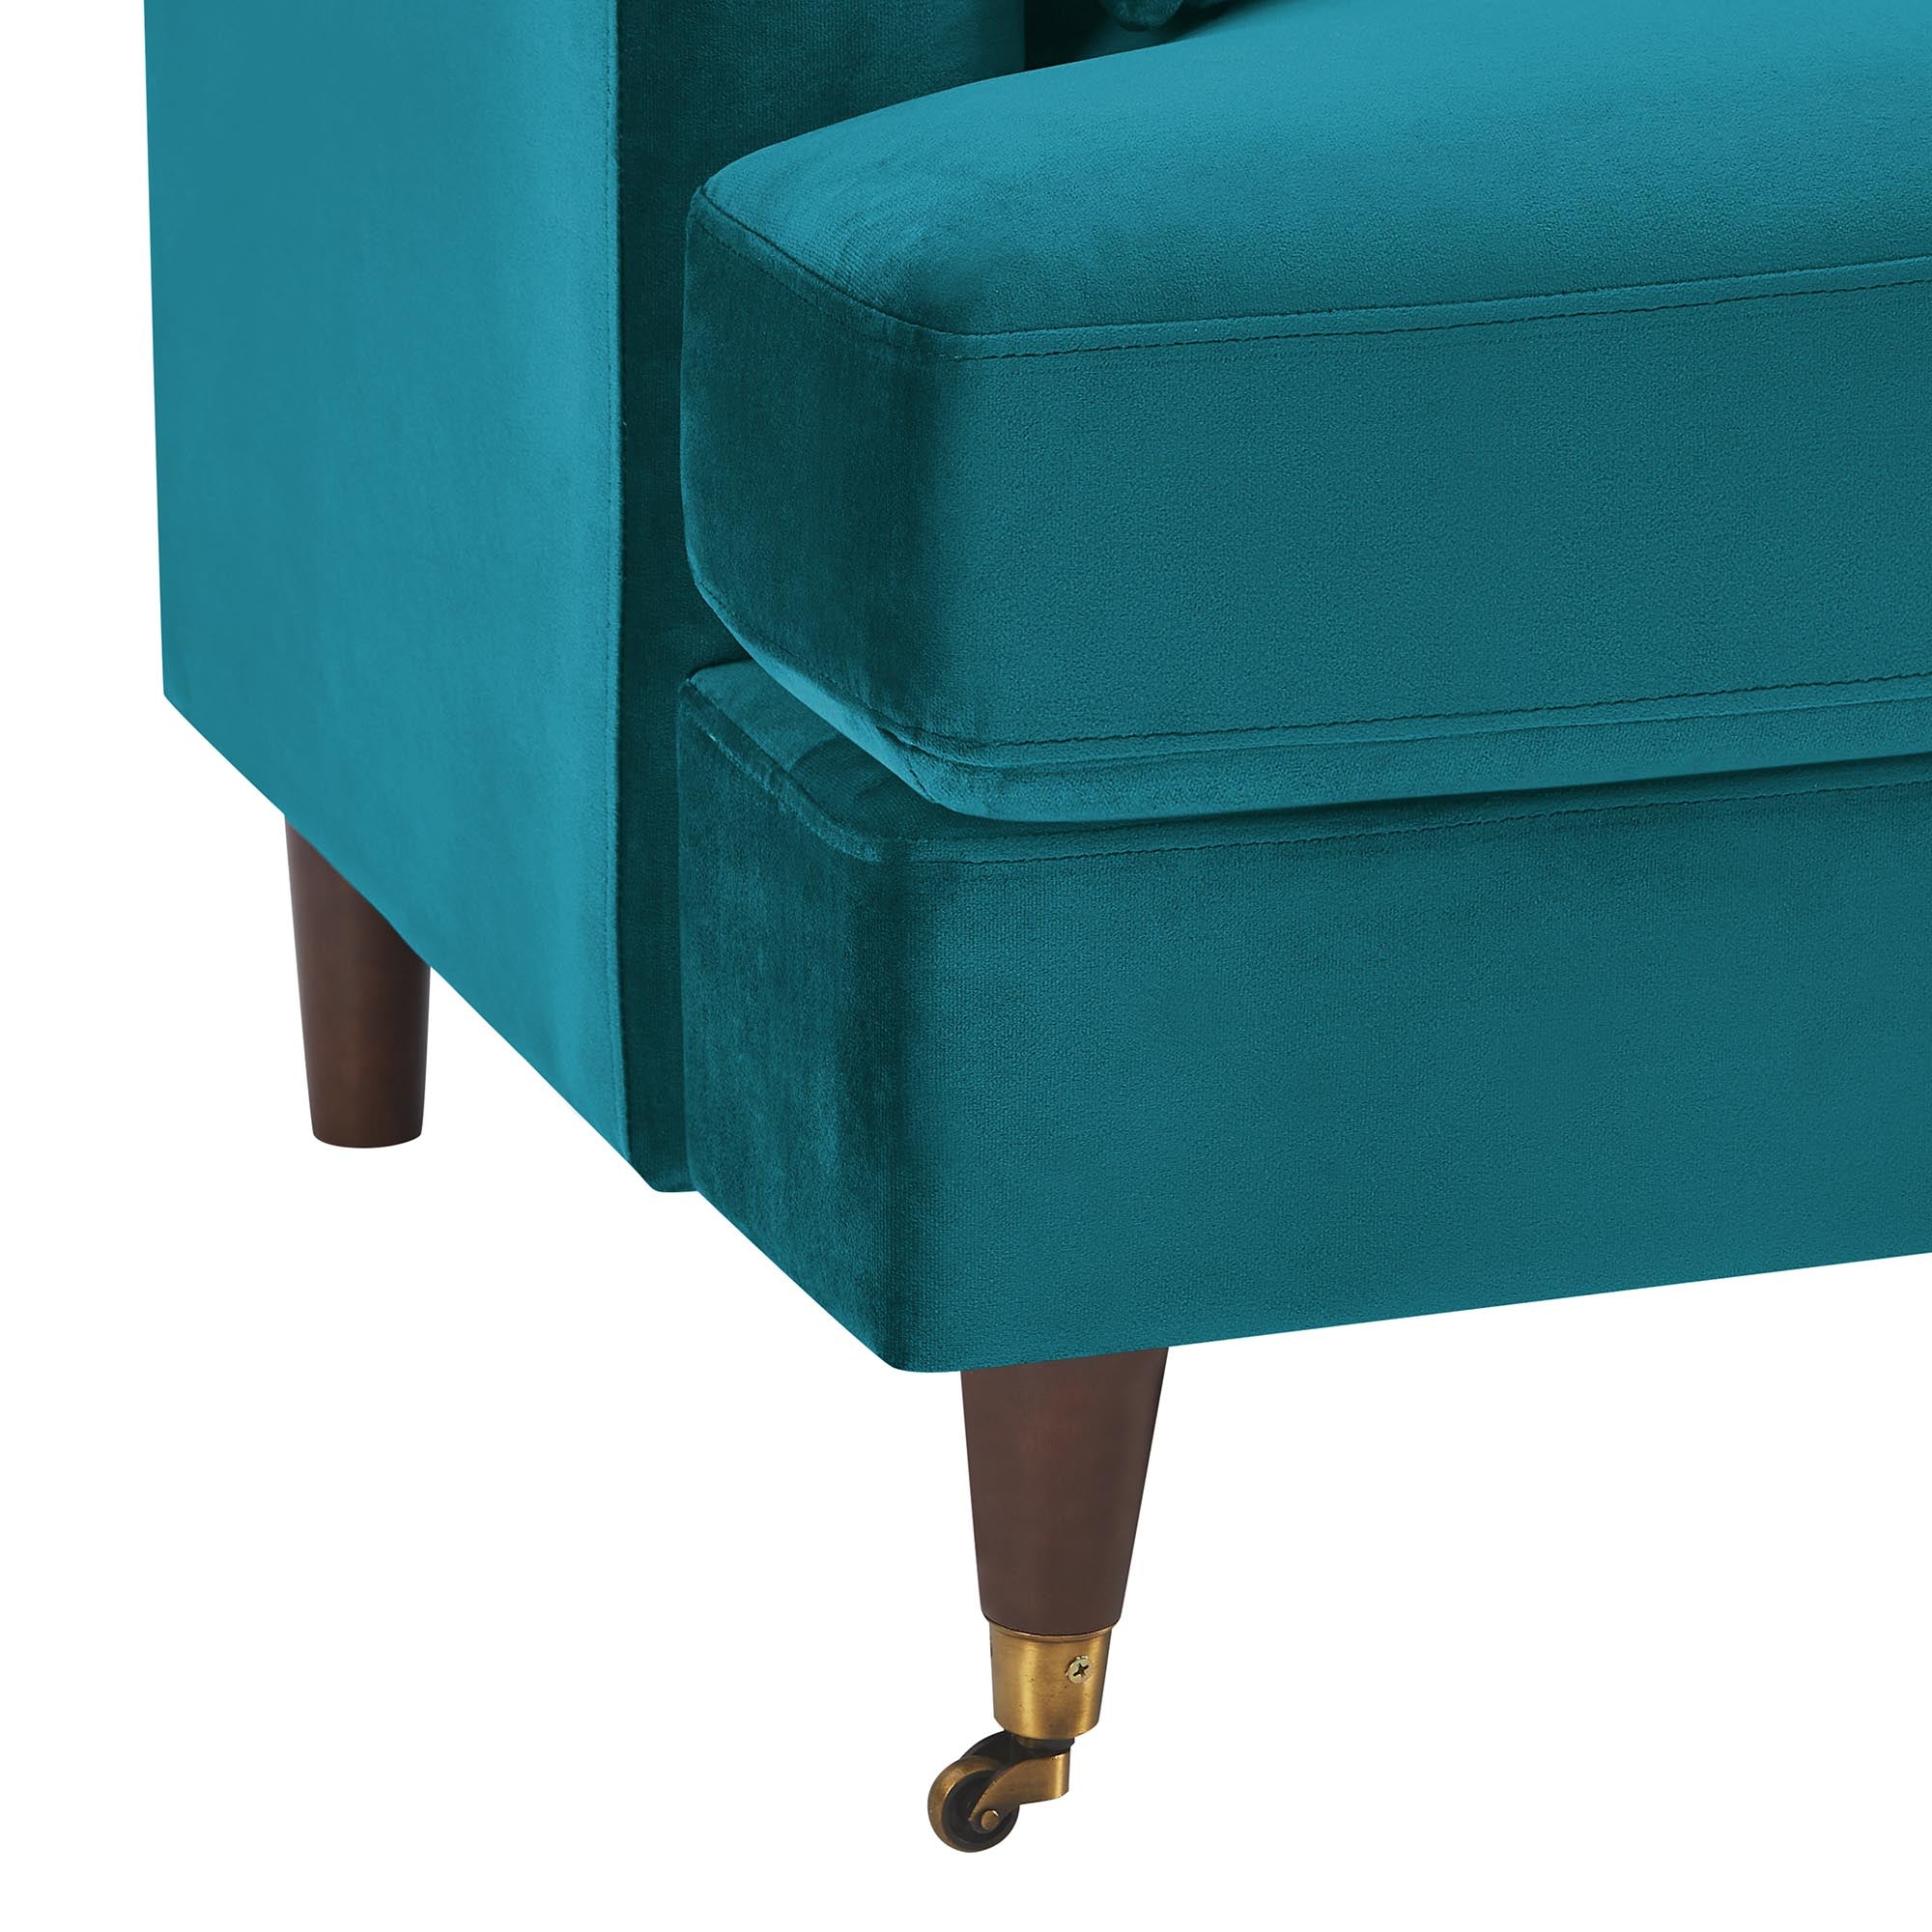 Brigette 2-Seater Teal Velvet Sofa with Antique Brass Castor Legs